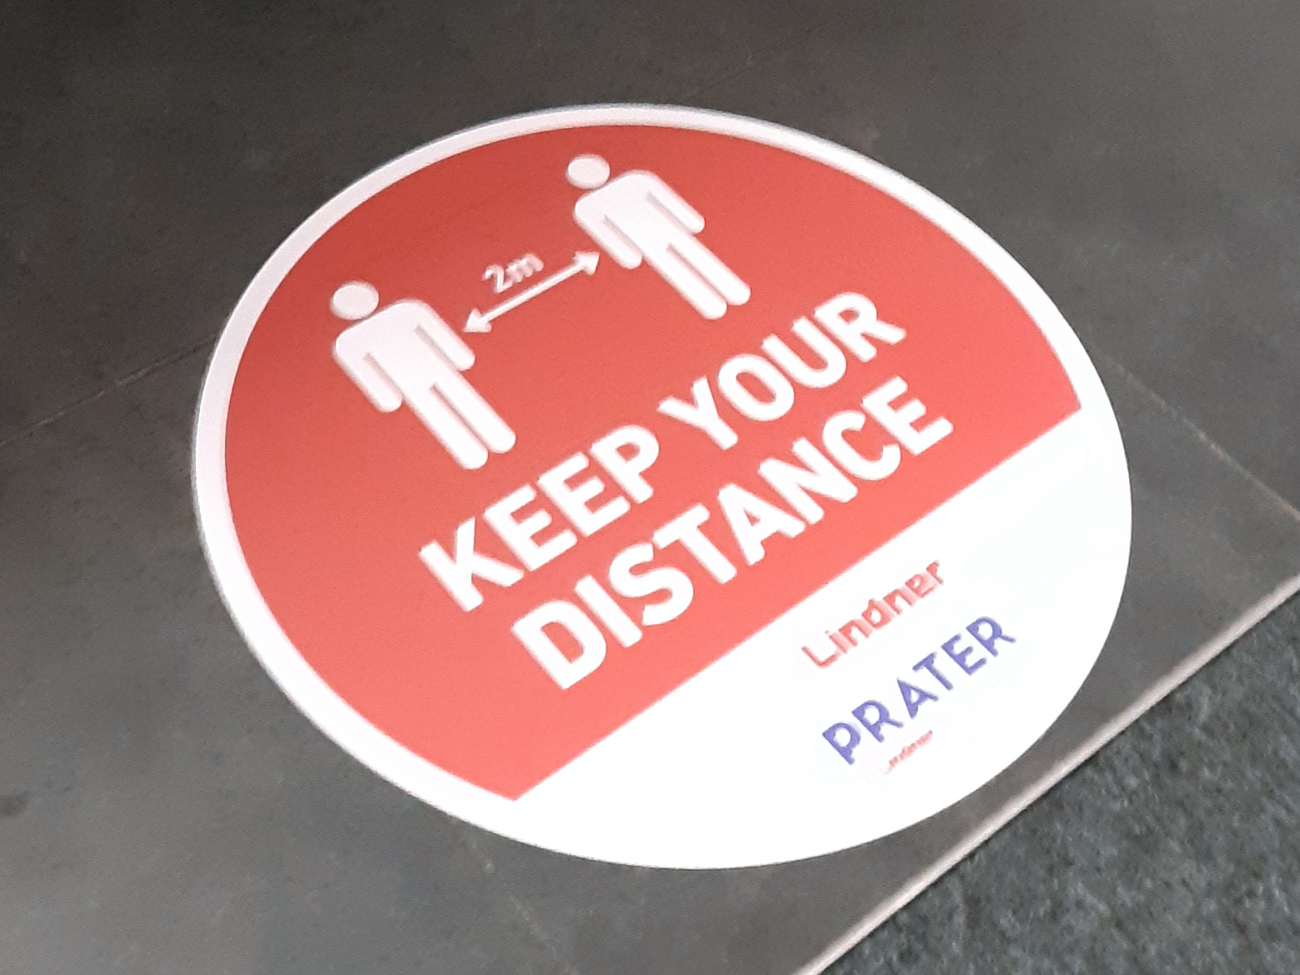 Prater keep your distance sticker